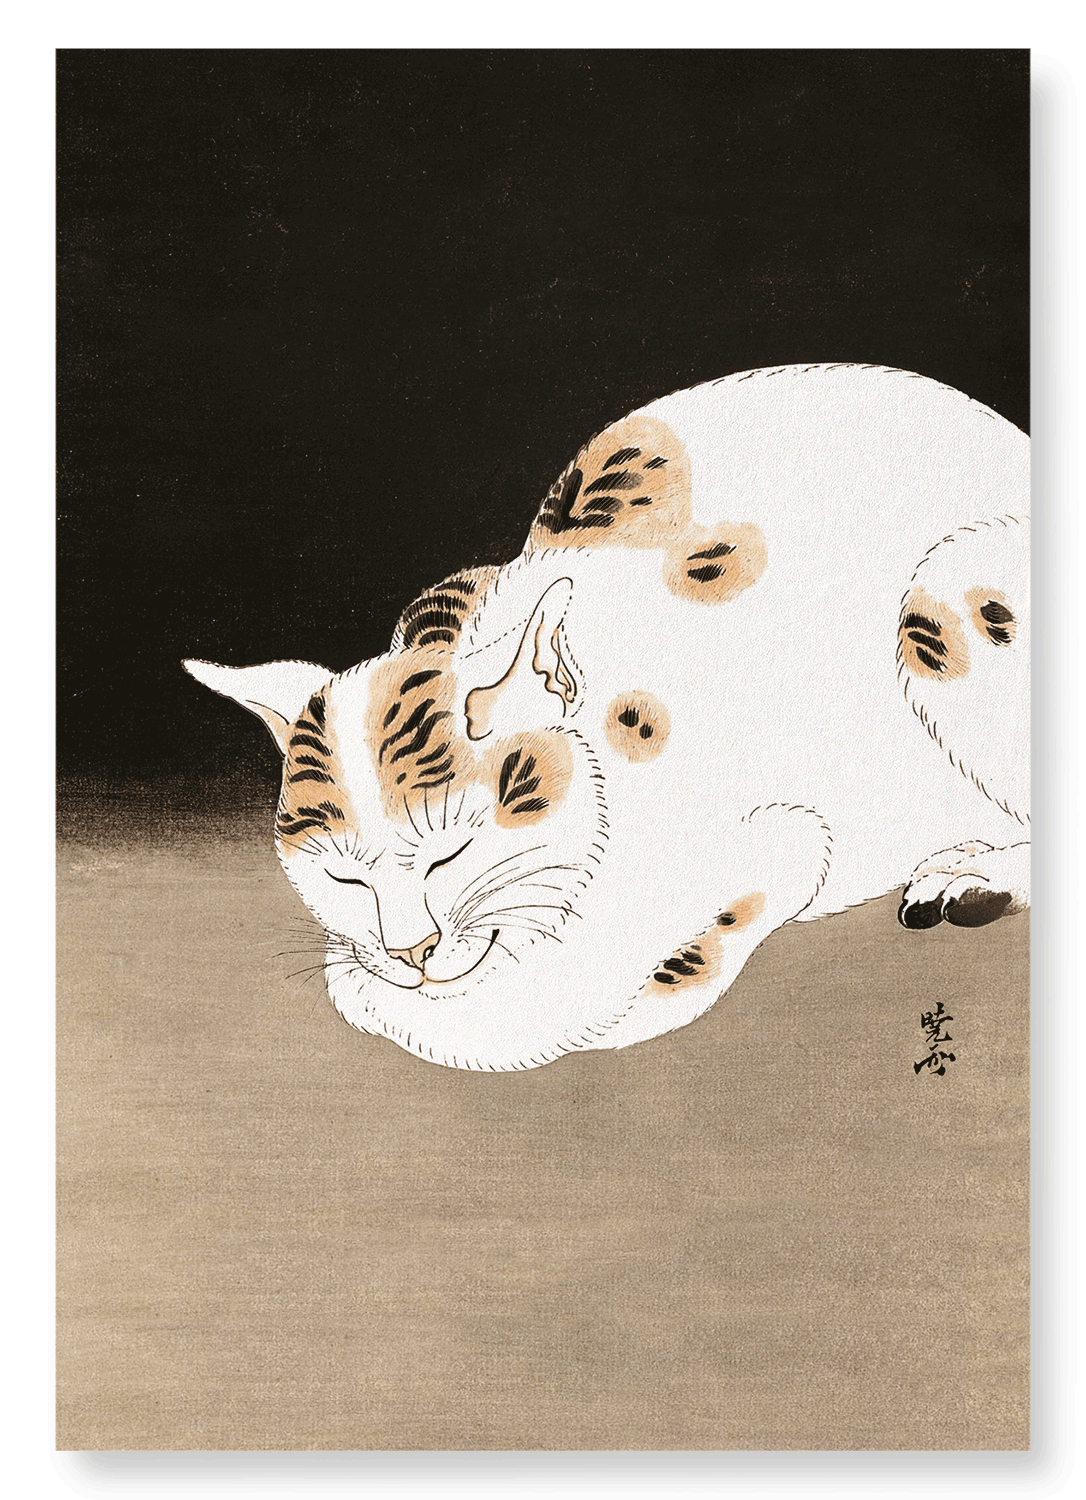 SLEEPING CAT (C.1880)